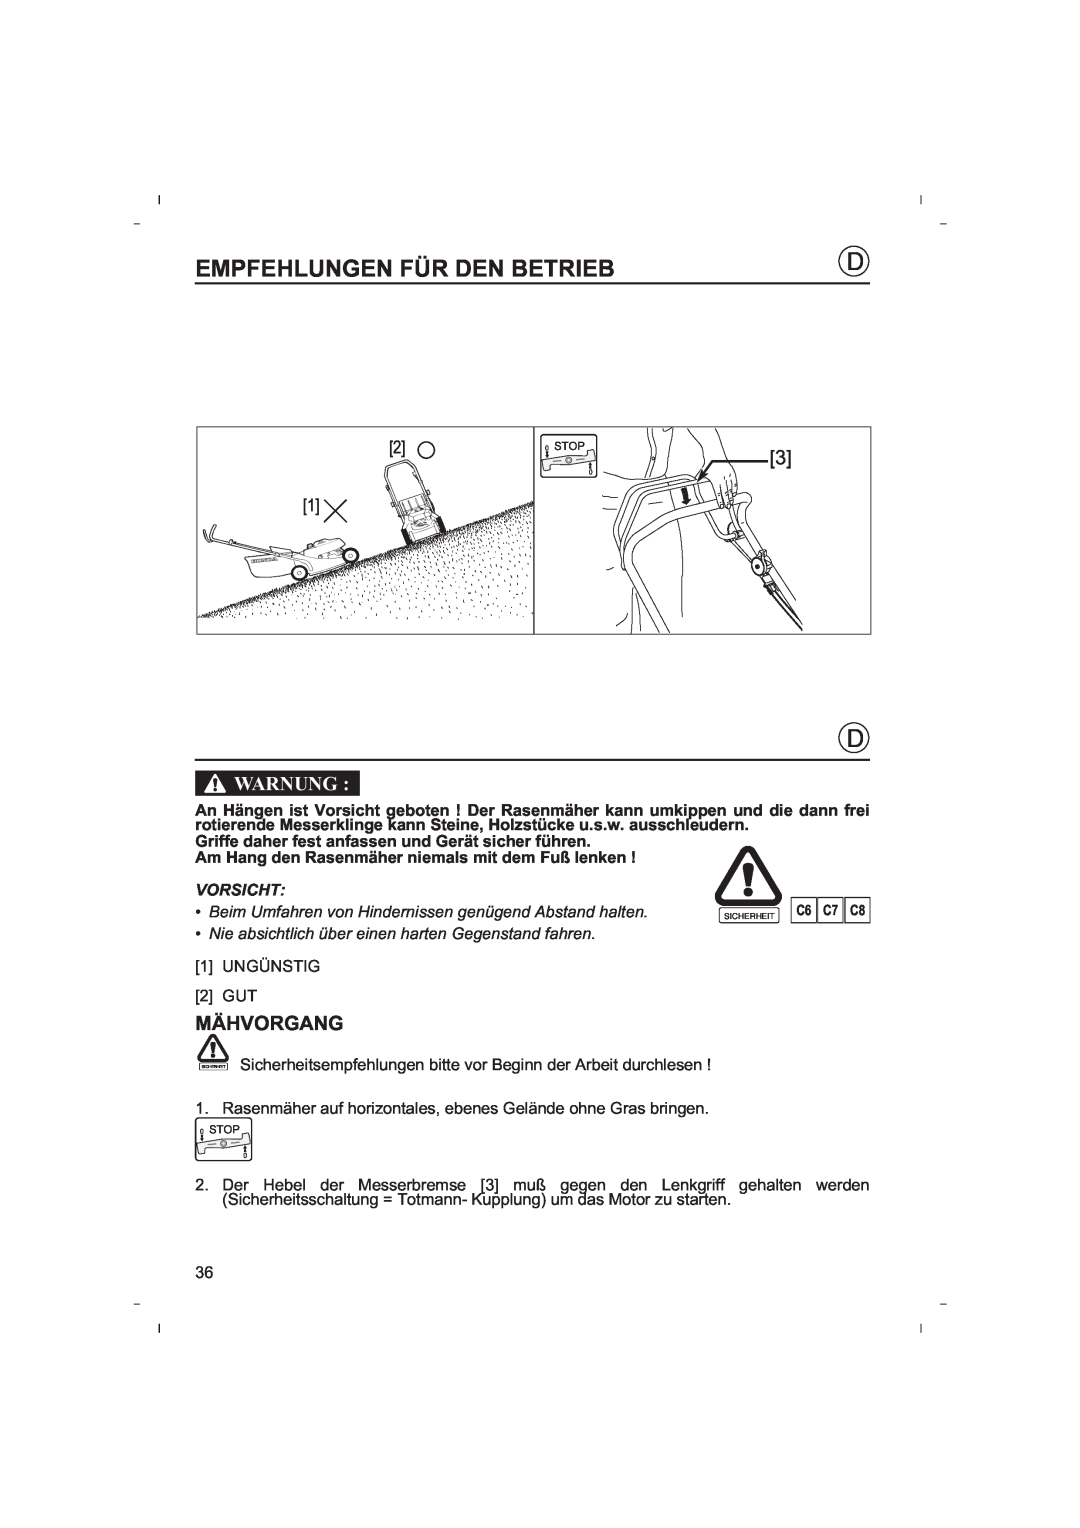 Honda Power Equipment HRB425C owner manual Empfehlungen Für Den Betrieb, Mähvorgang, Warnung 